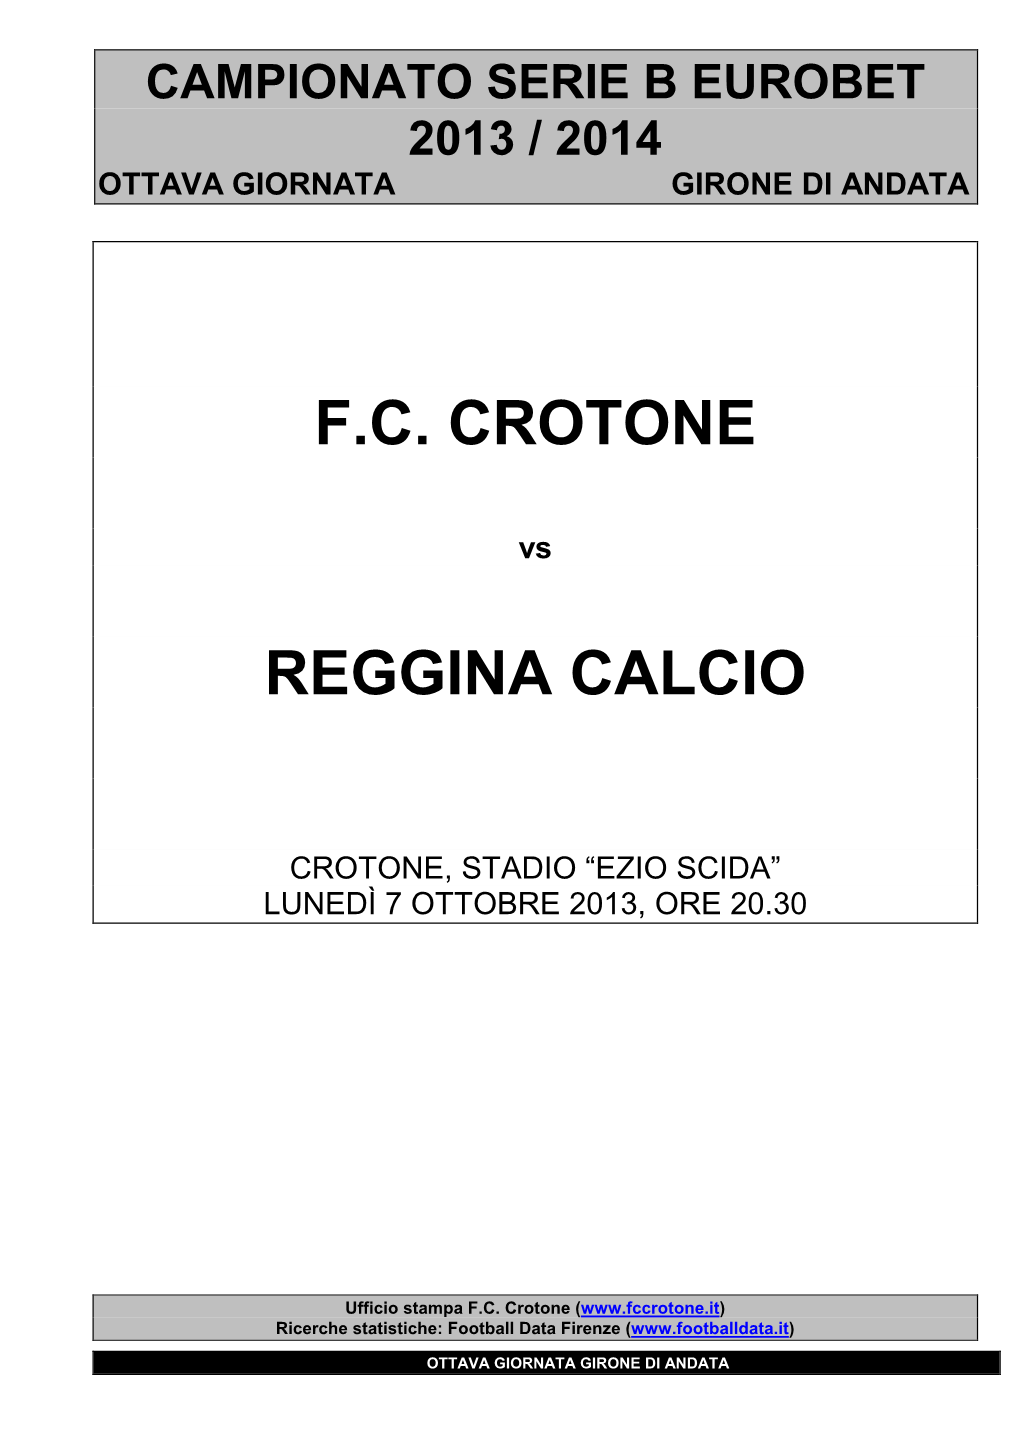 Crotone-Reggina